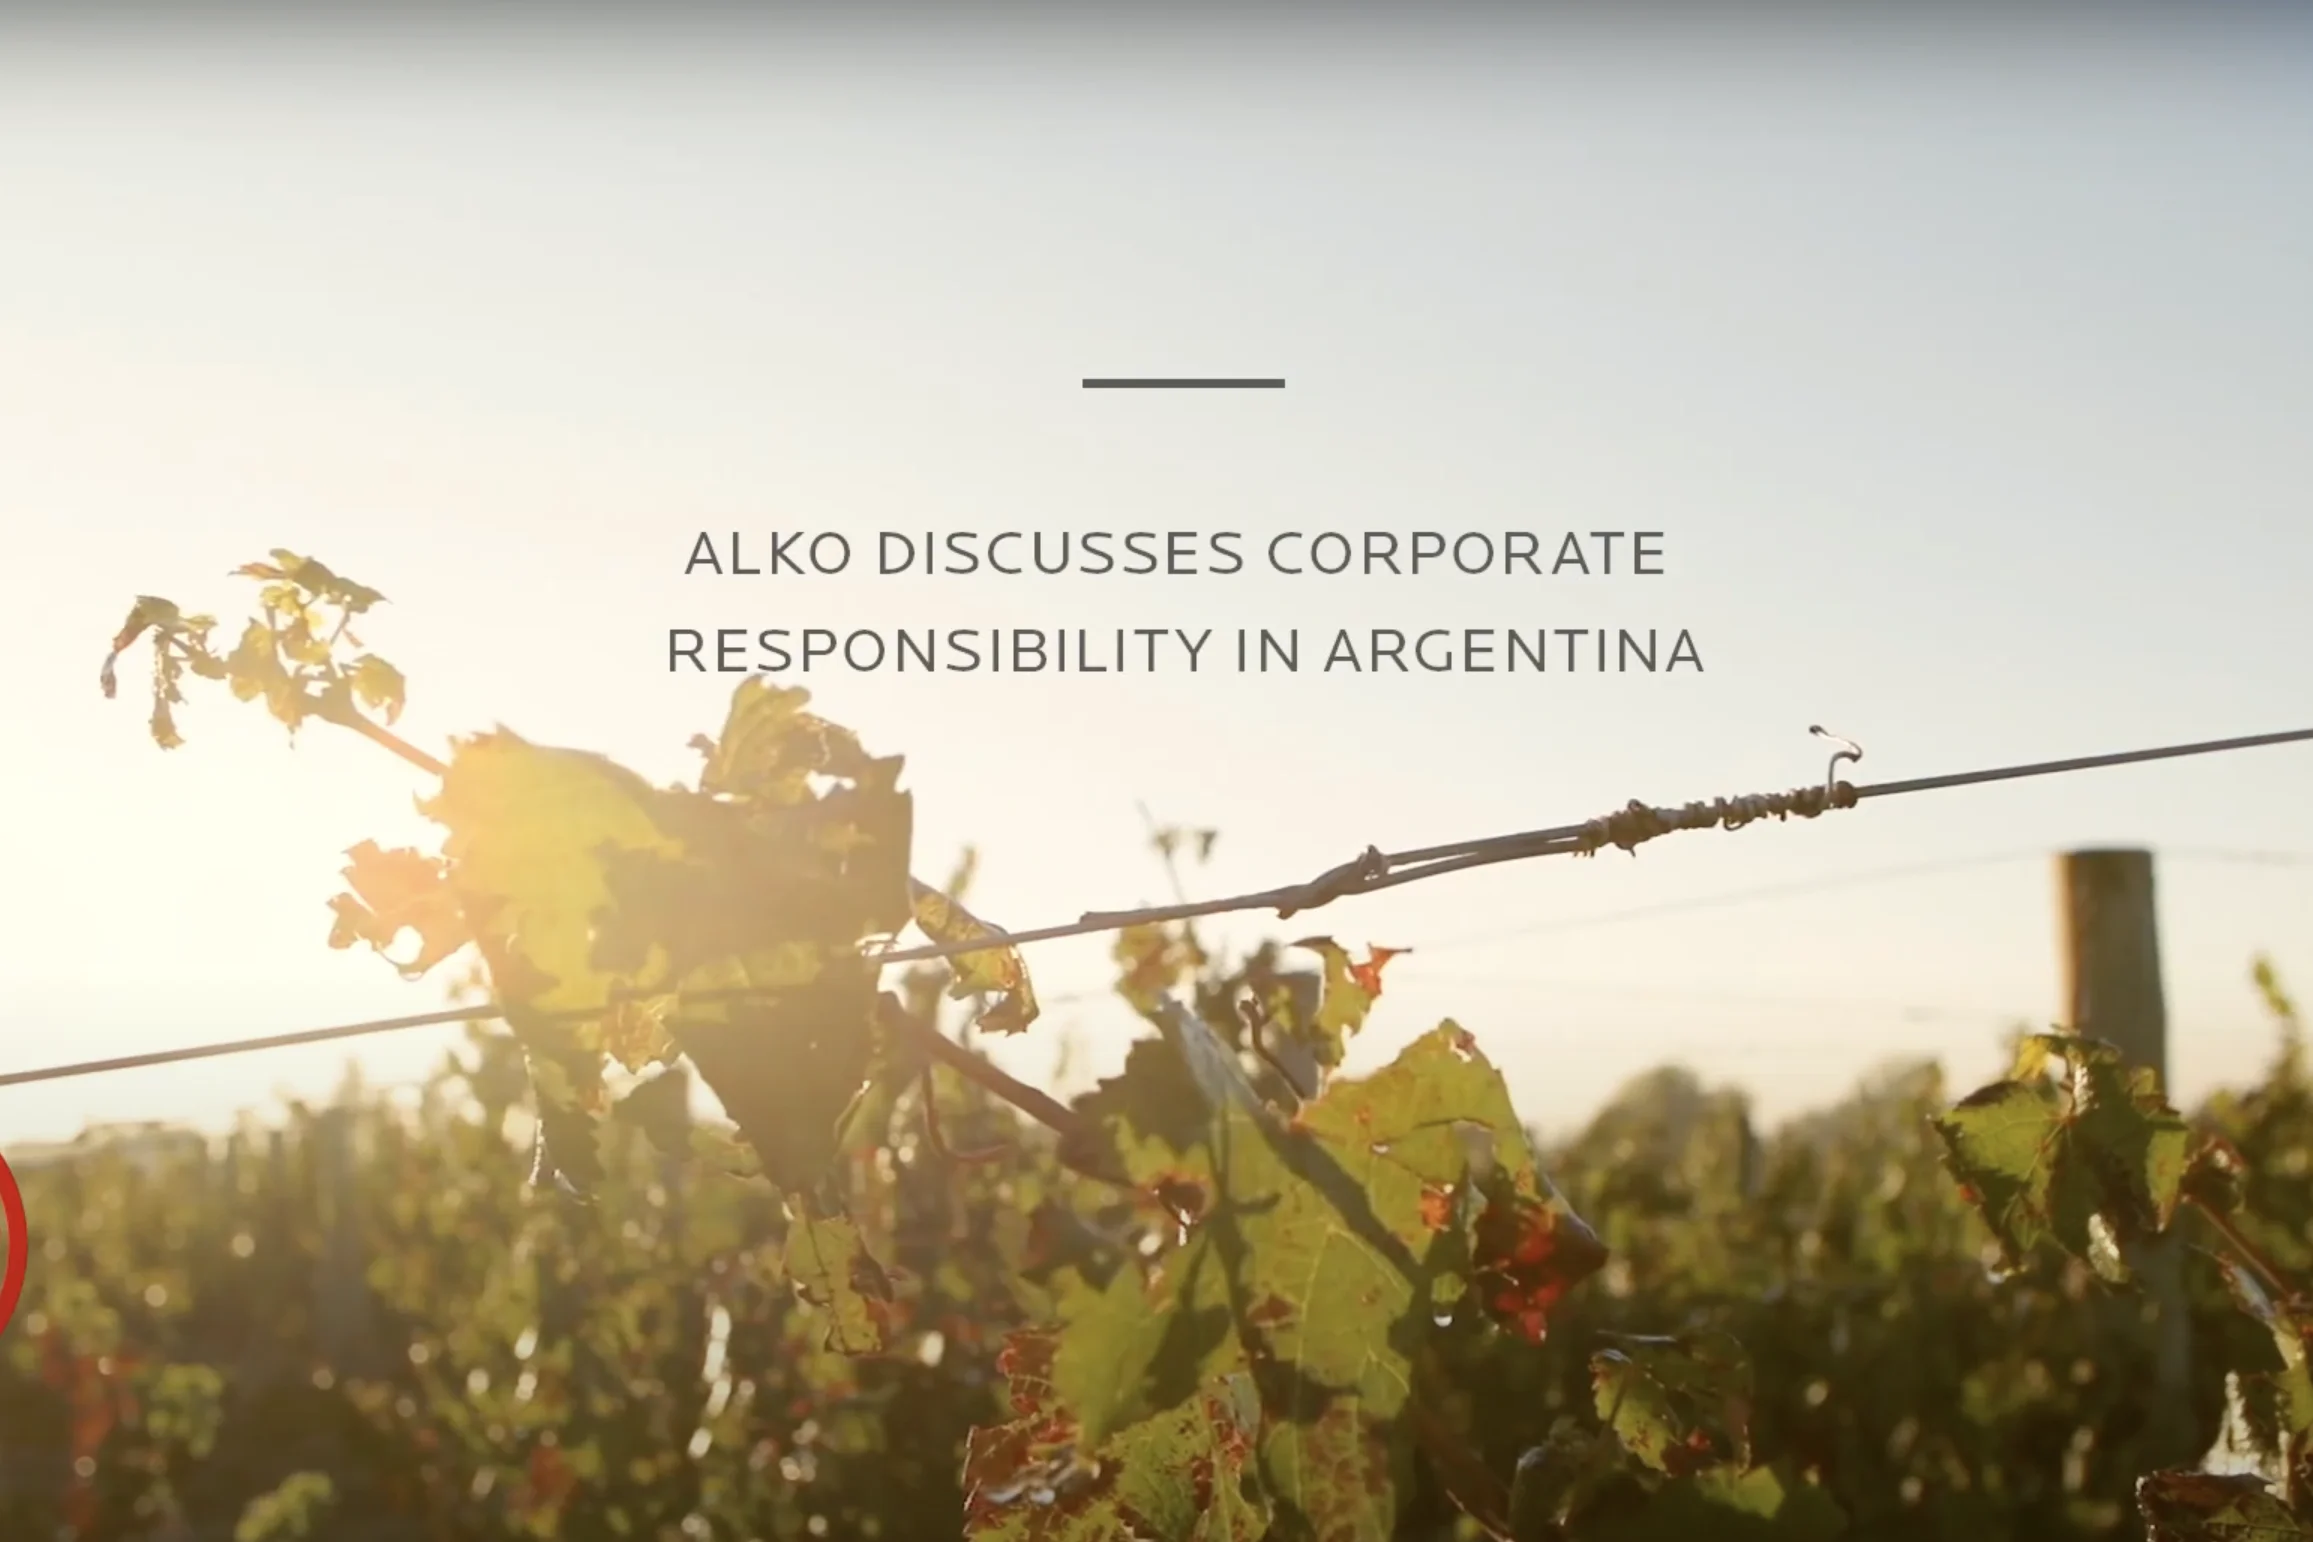 Alko discusses corporate responsibility in Argentina